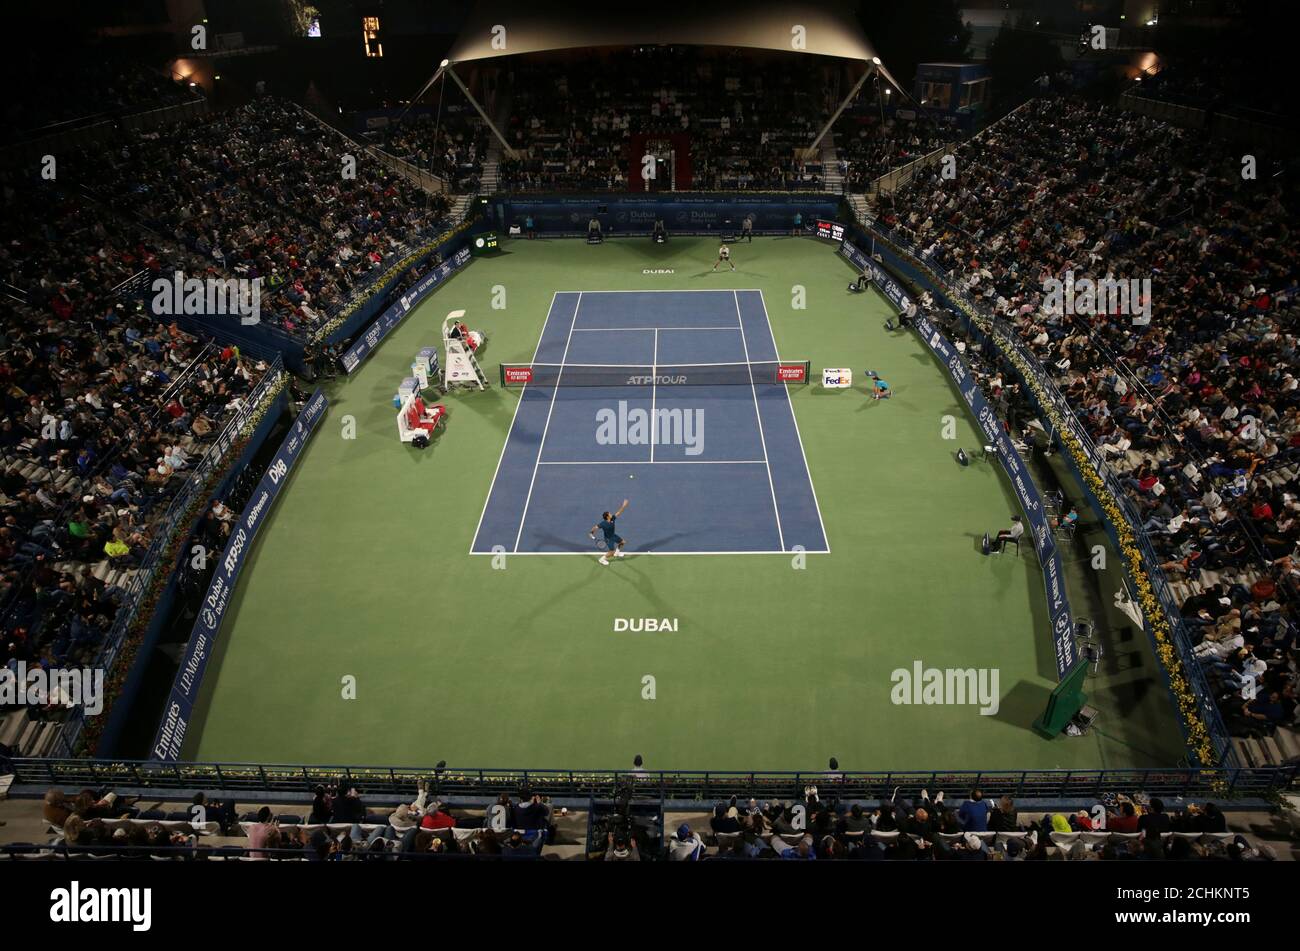 Dubai tennis stadium hi-res stock photography and images - Alamy